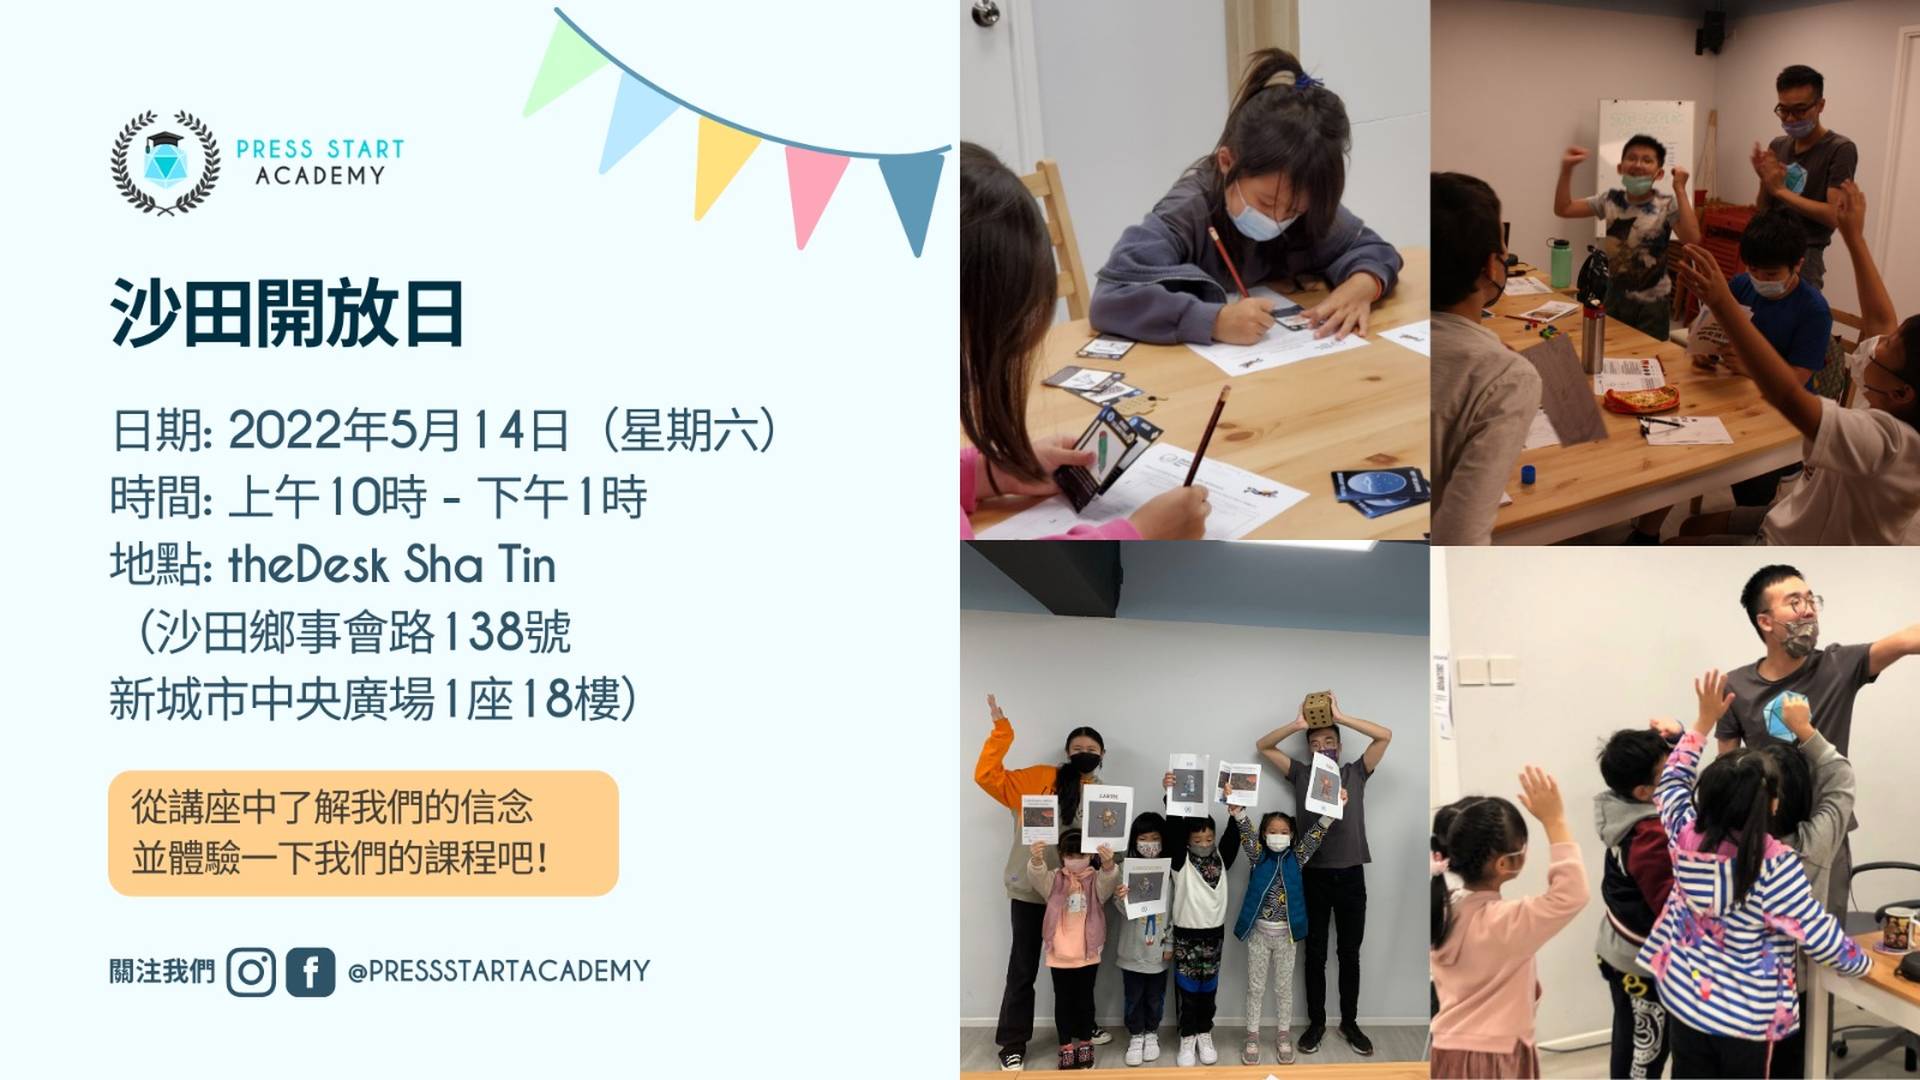 Press Start Academy 沙田開放日